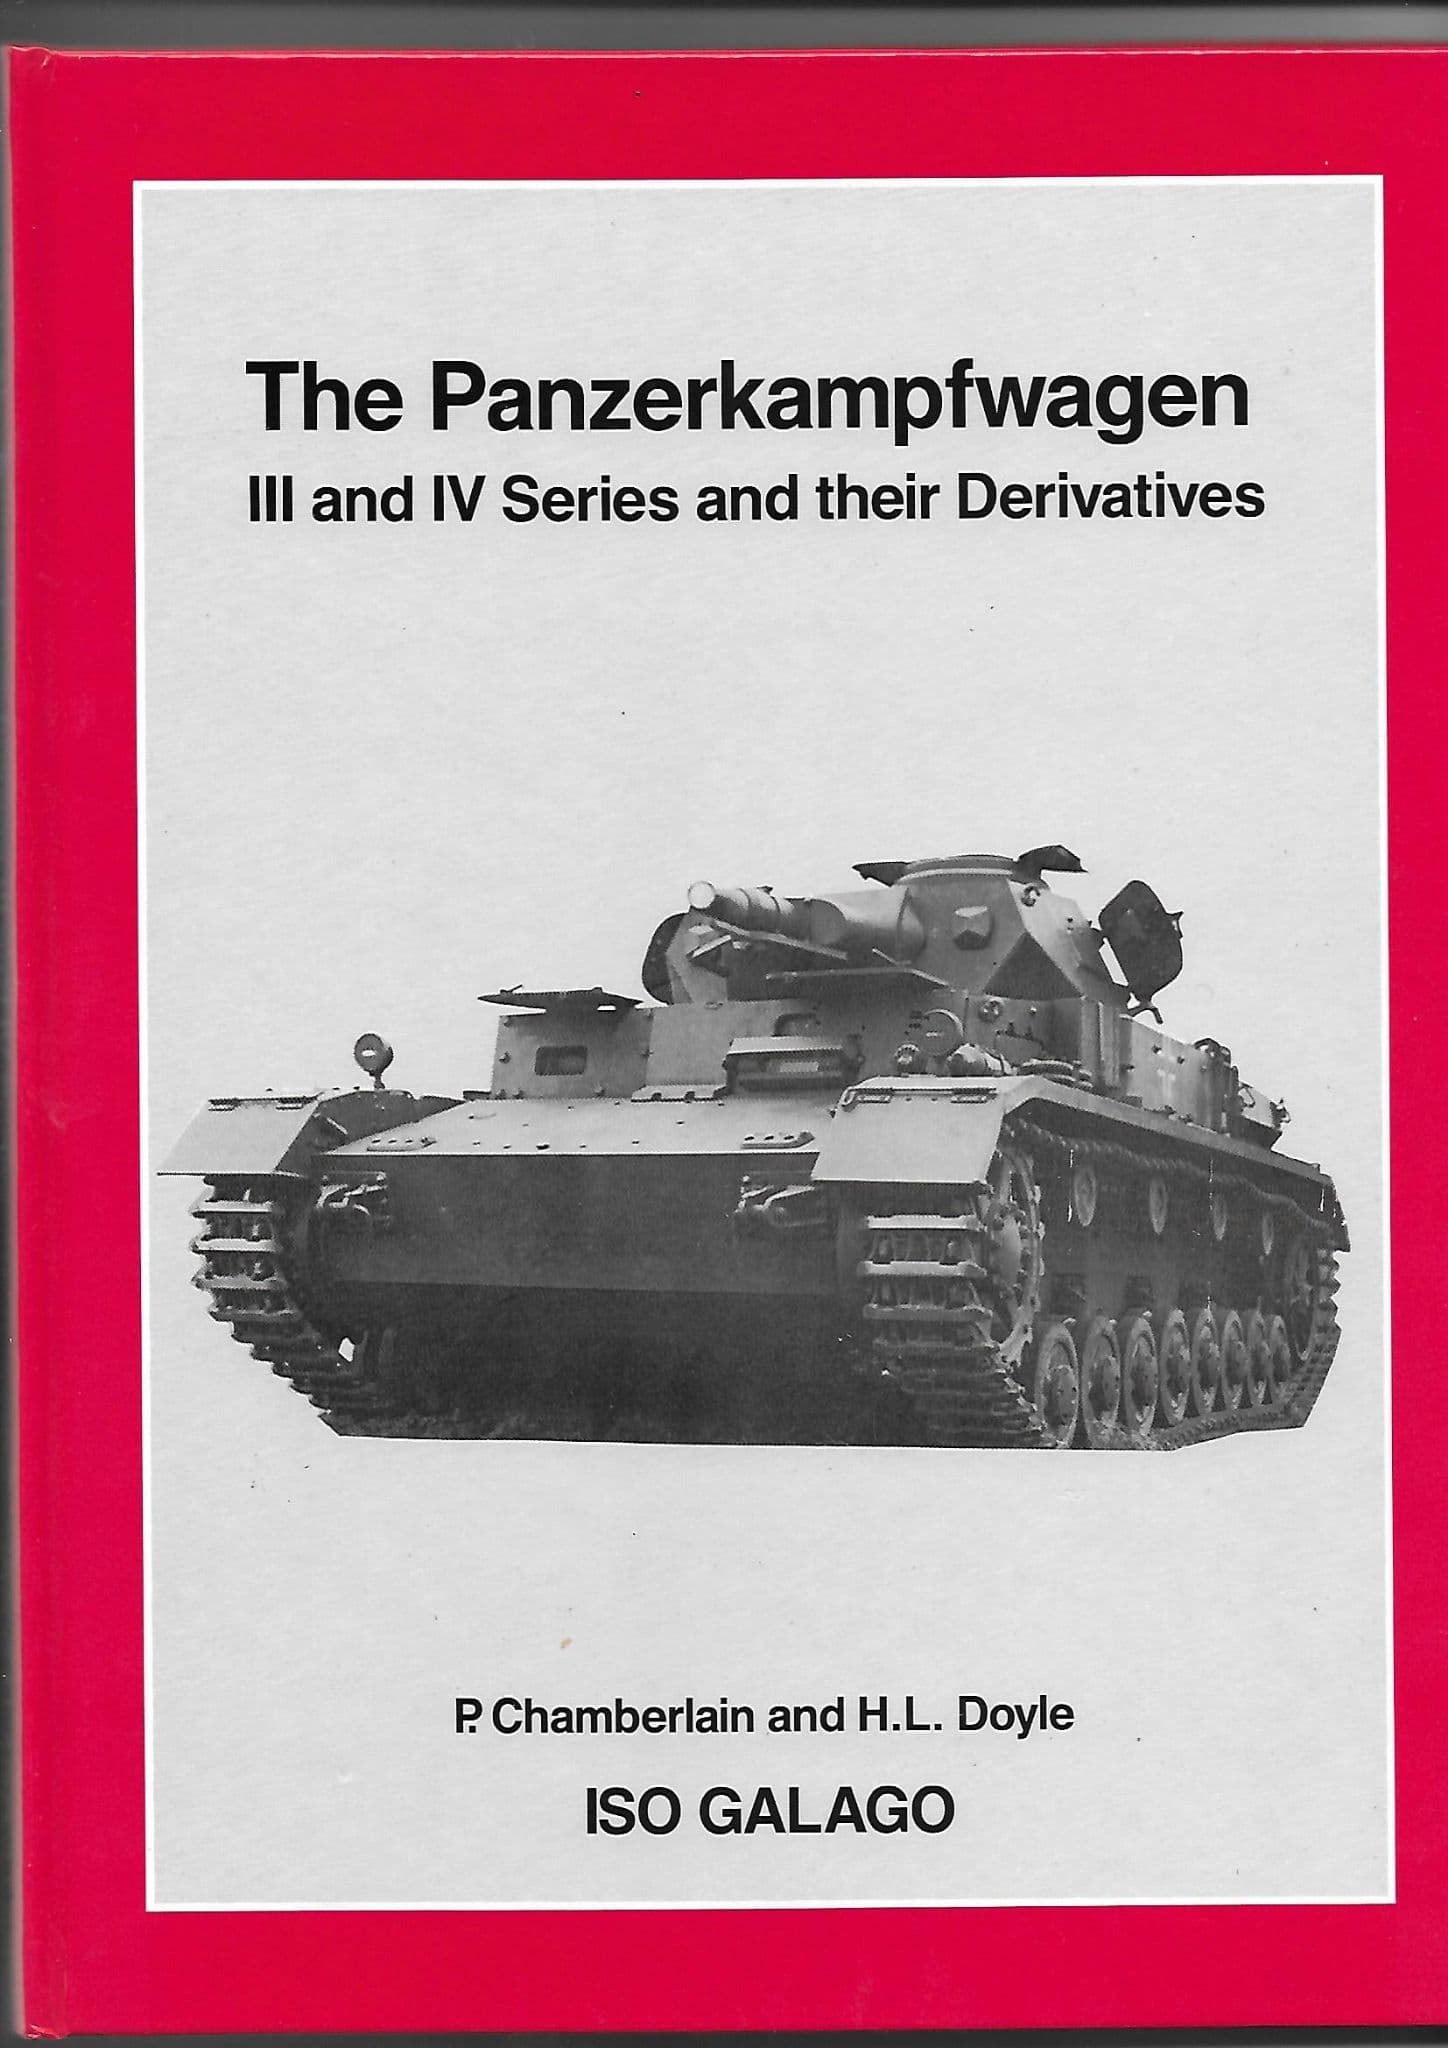 The Panzerkampfwagen III and VI Series and their Derivatives